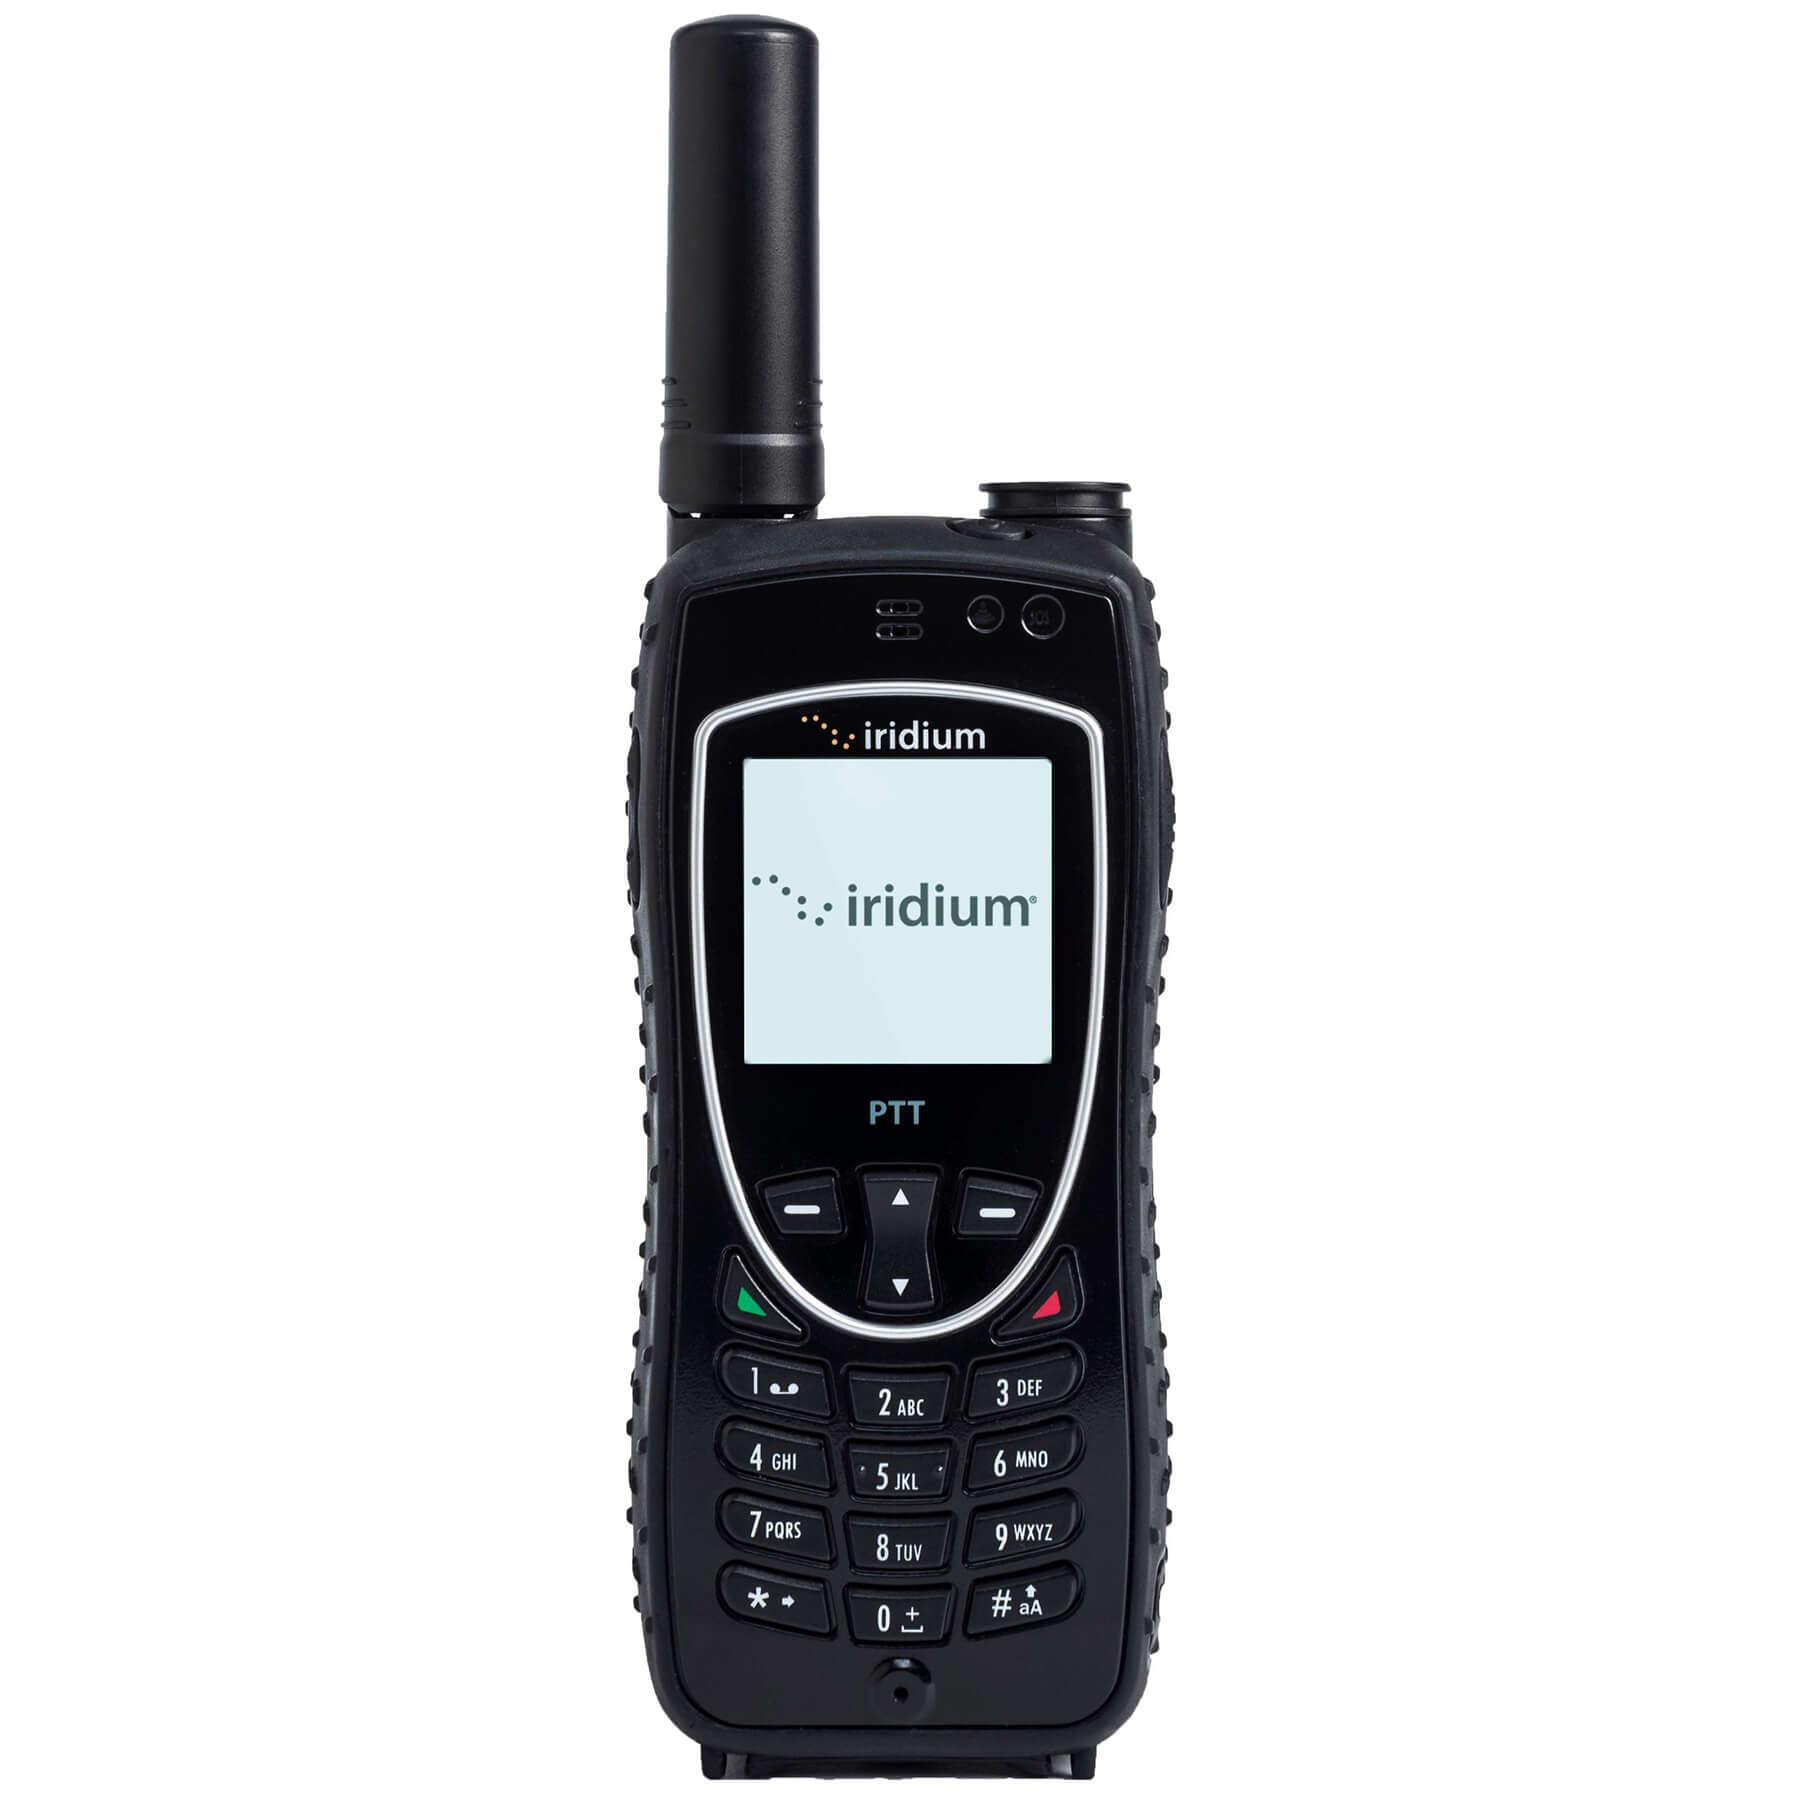 Iridium Extreme 9575 PTT Satellite Radio